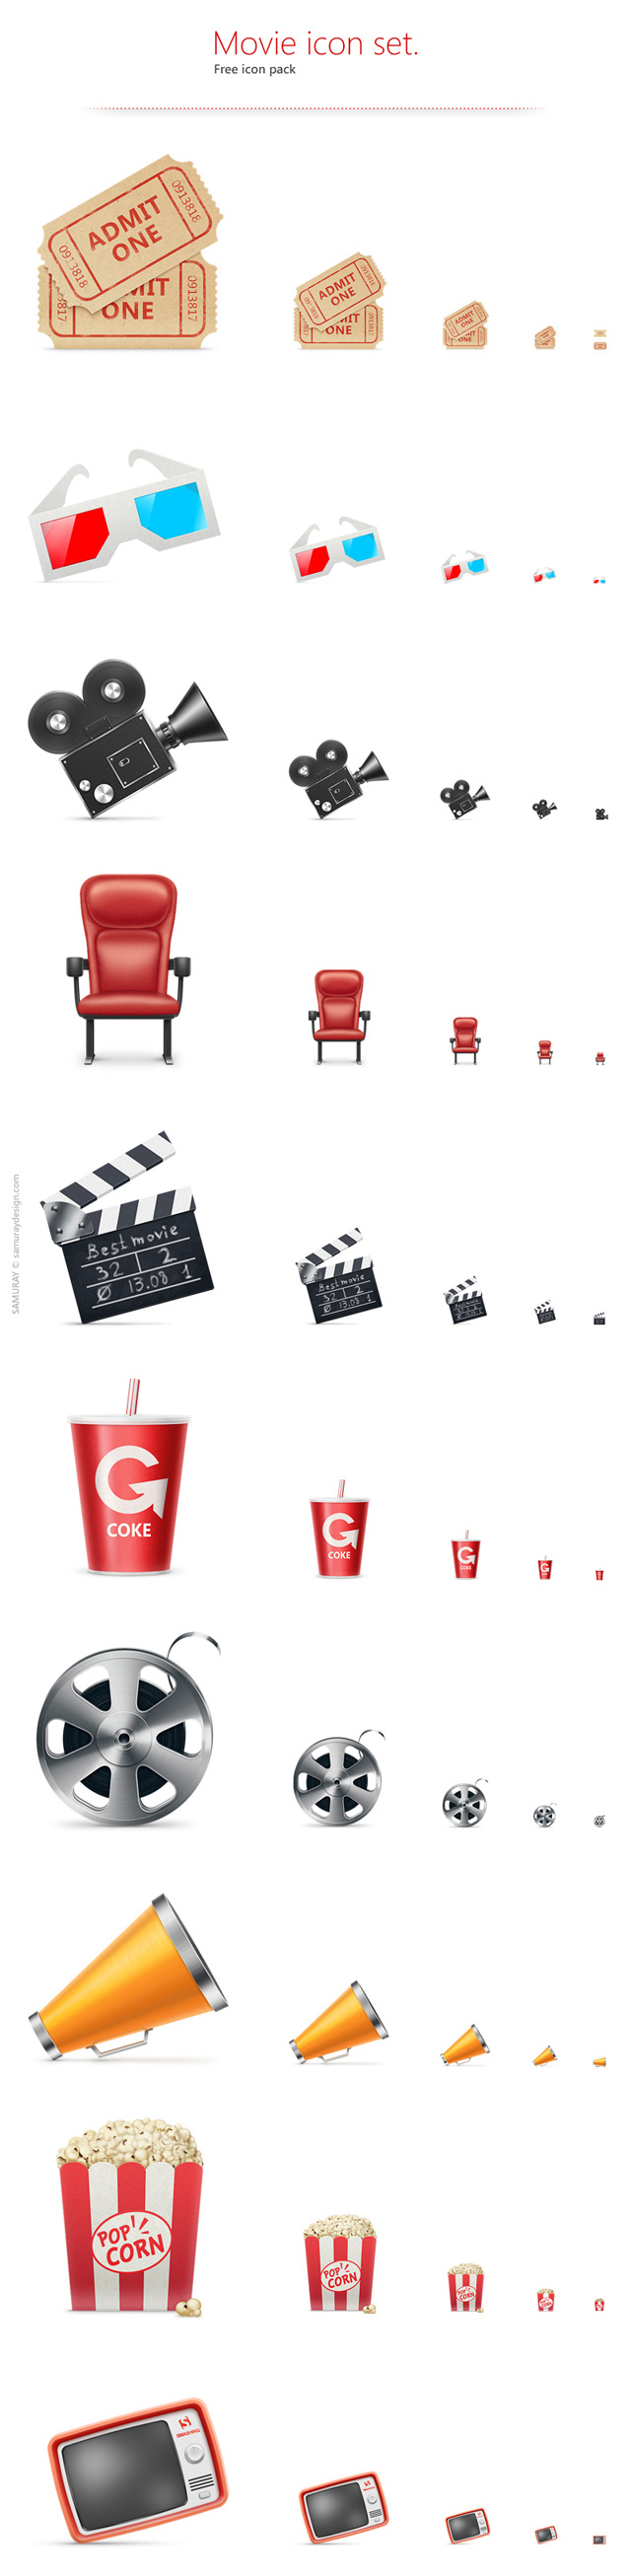 Free Movie Icon Set - PSD Source, PNG, JPG